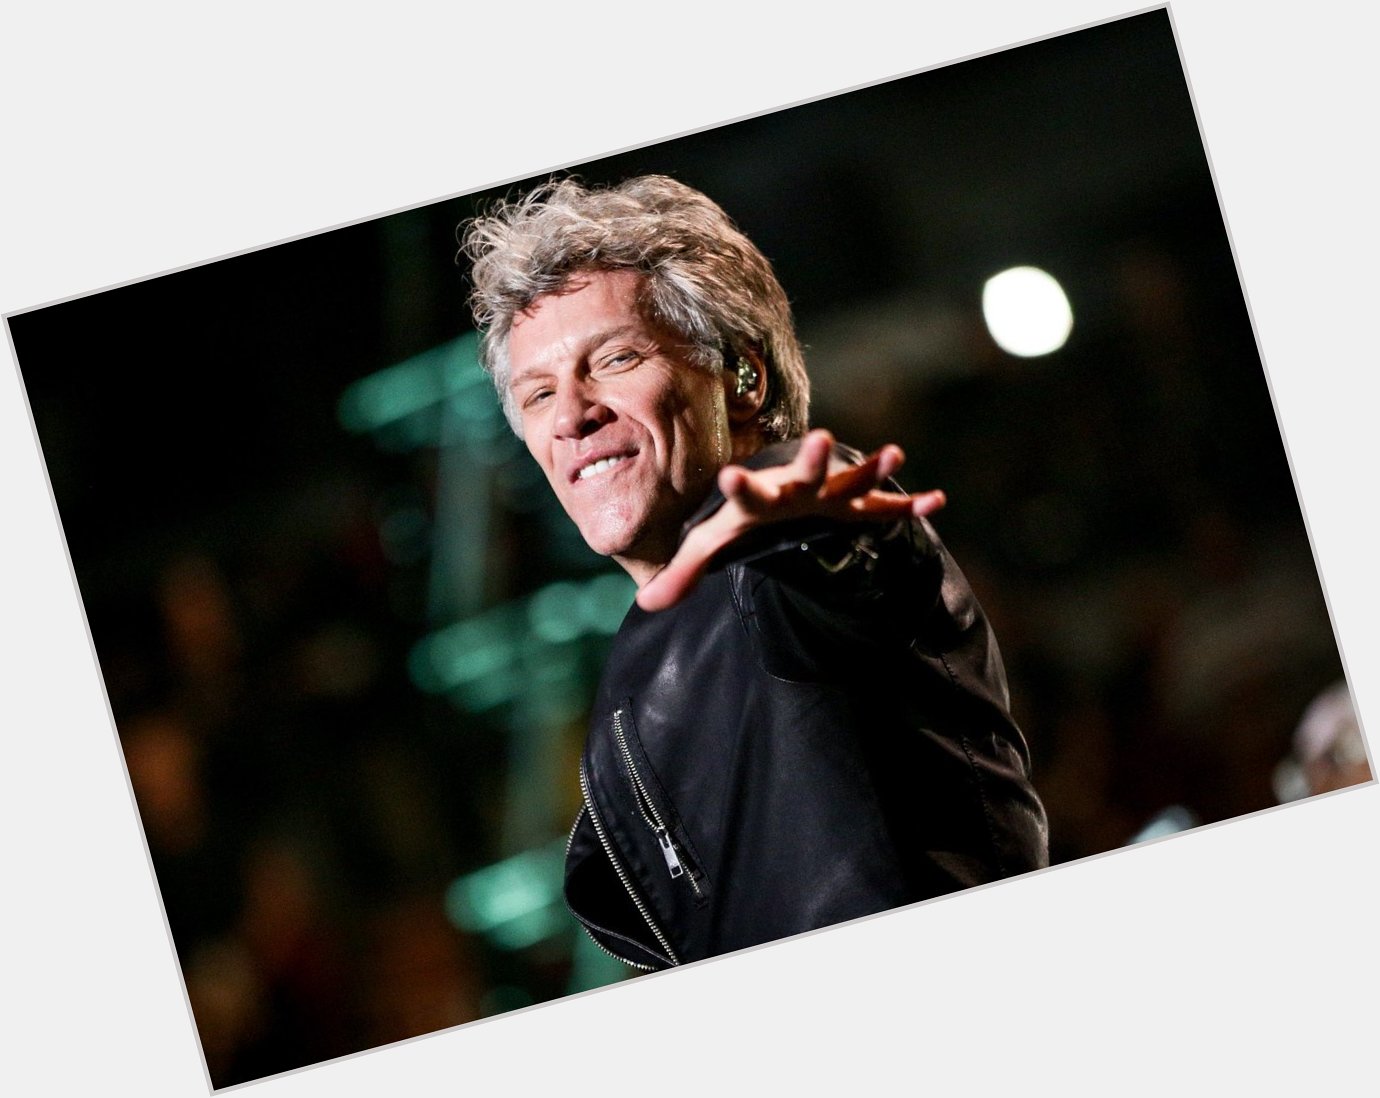 Happy birthday, Jon Bon Jovi!  Looking forward to rocking out on June 18! 